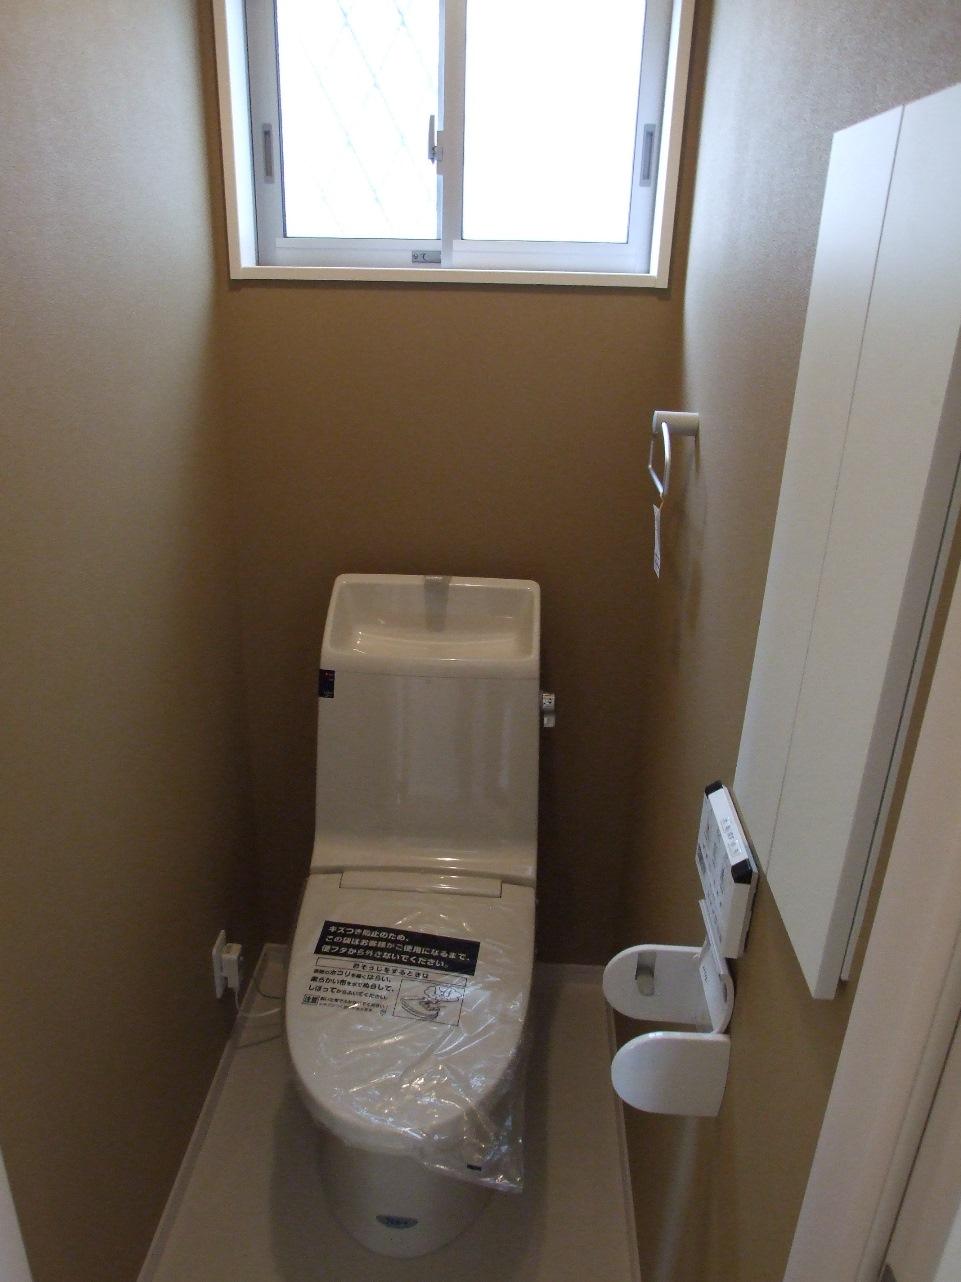 Toilet. 1 Building, toilet